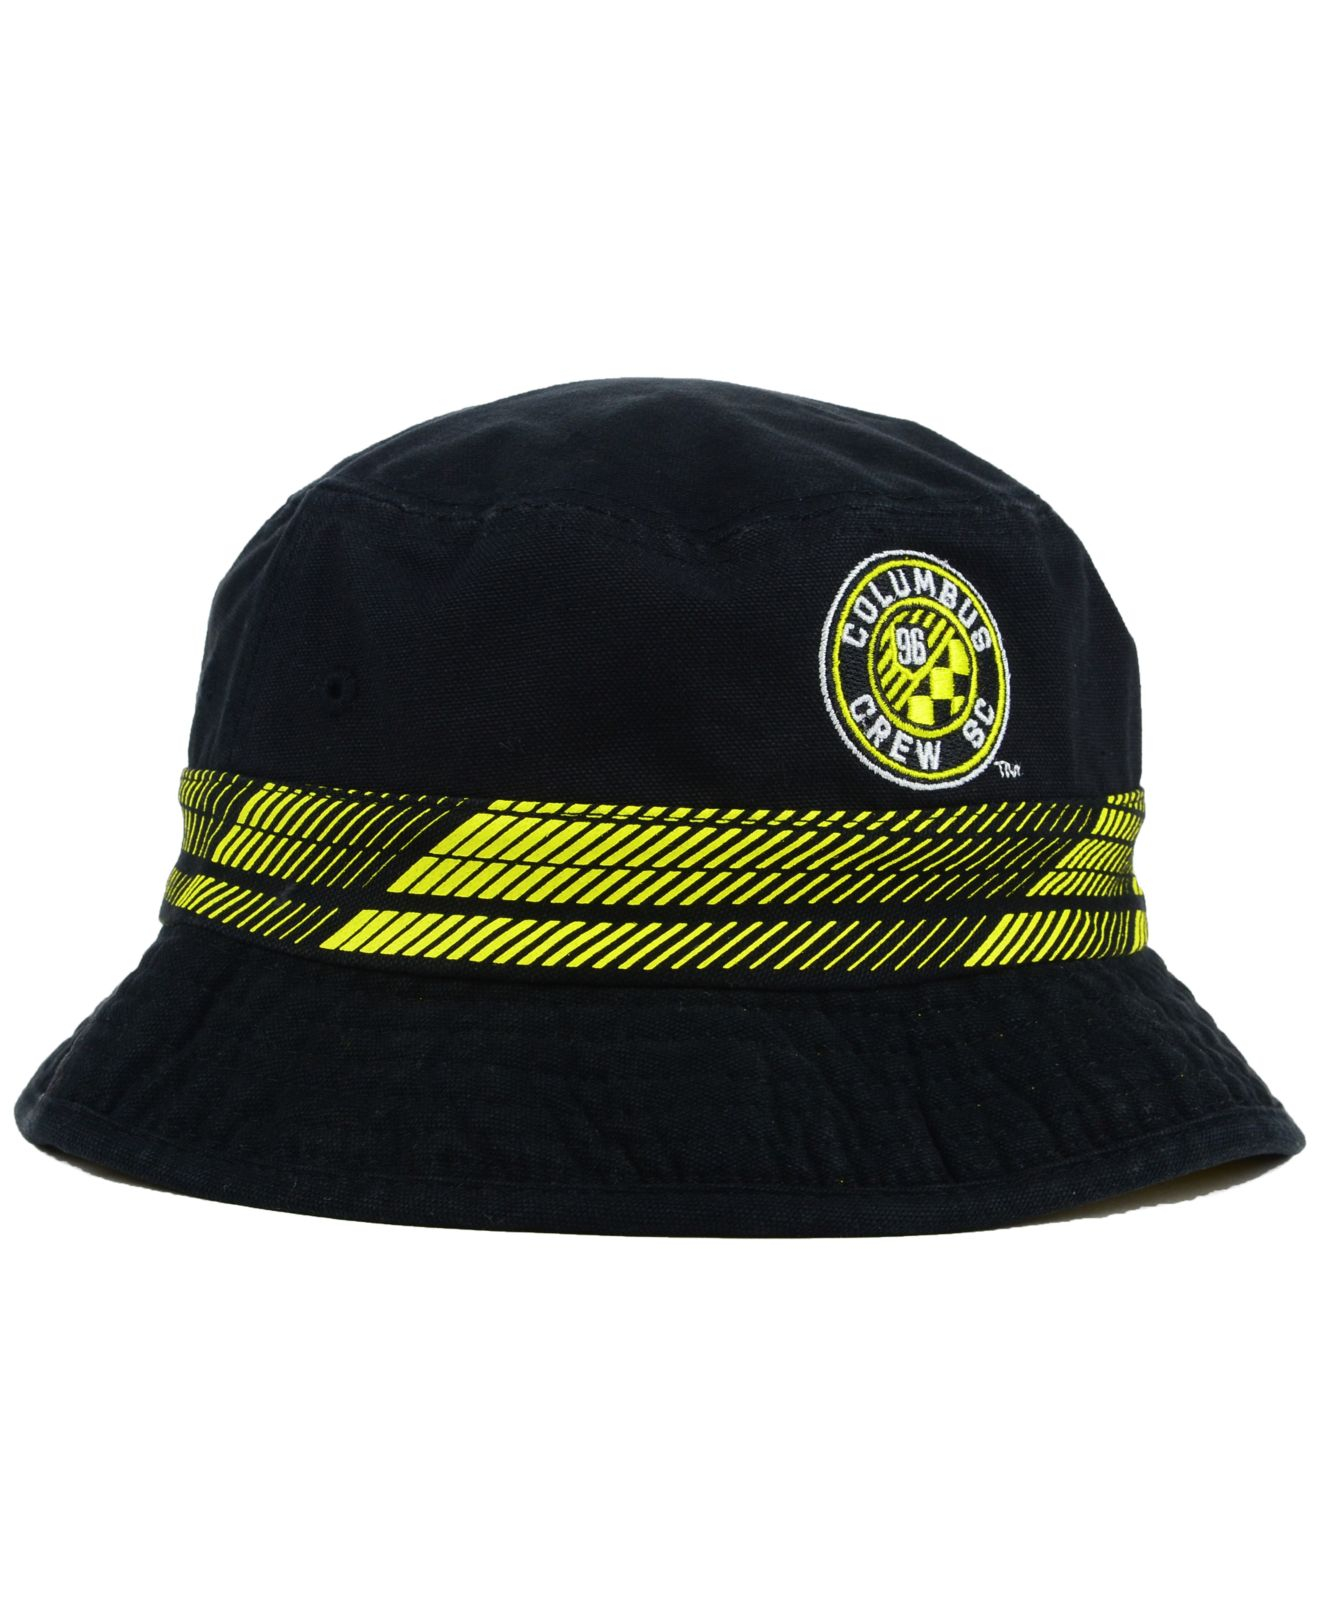 https://cdna.lystit.com/photos/bc65-2015/05/28/adidas-yellow-columbus-crew-evolution-bucket-hat-product-1-066232829-normal.jpeg